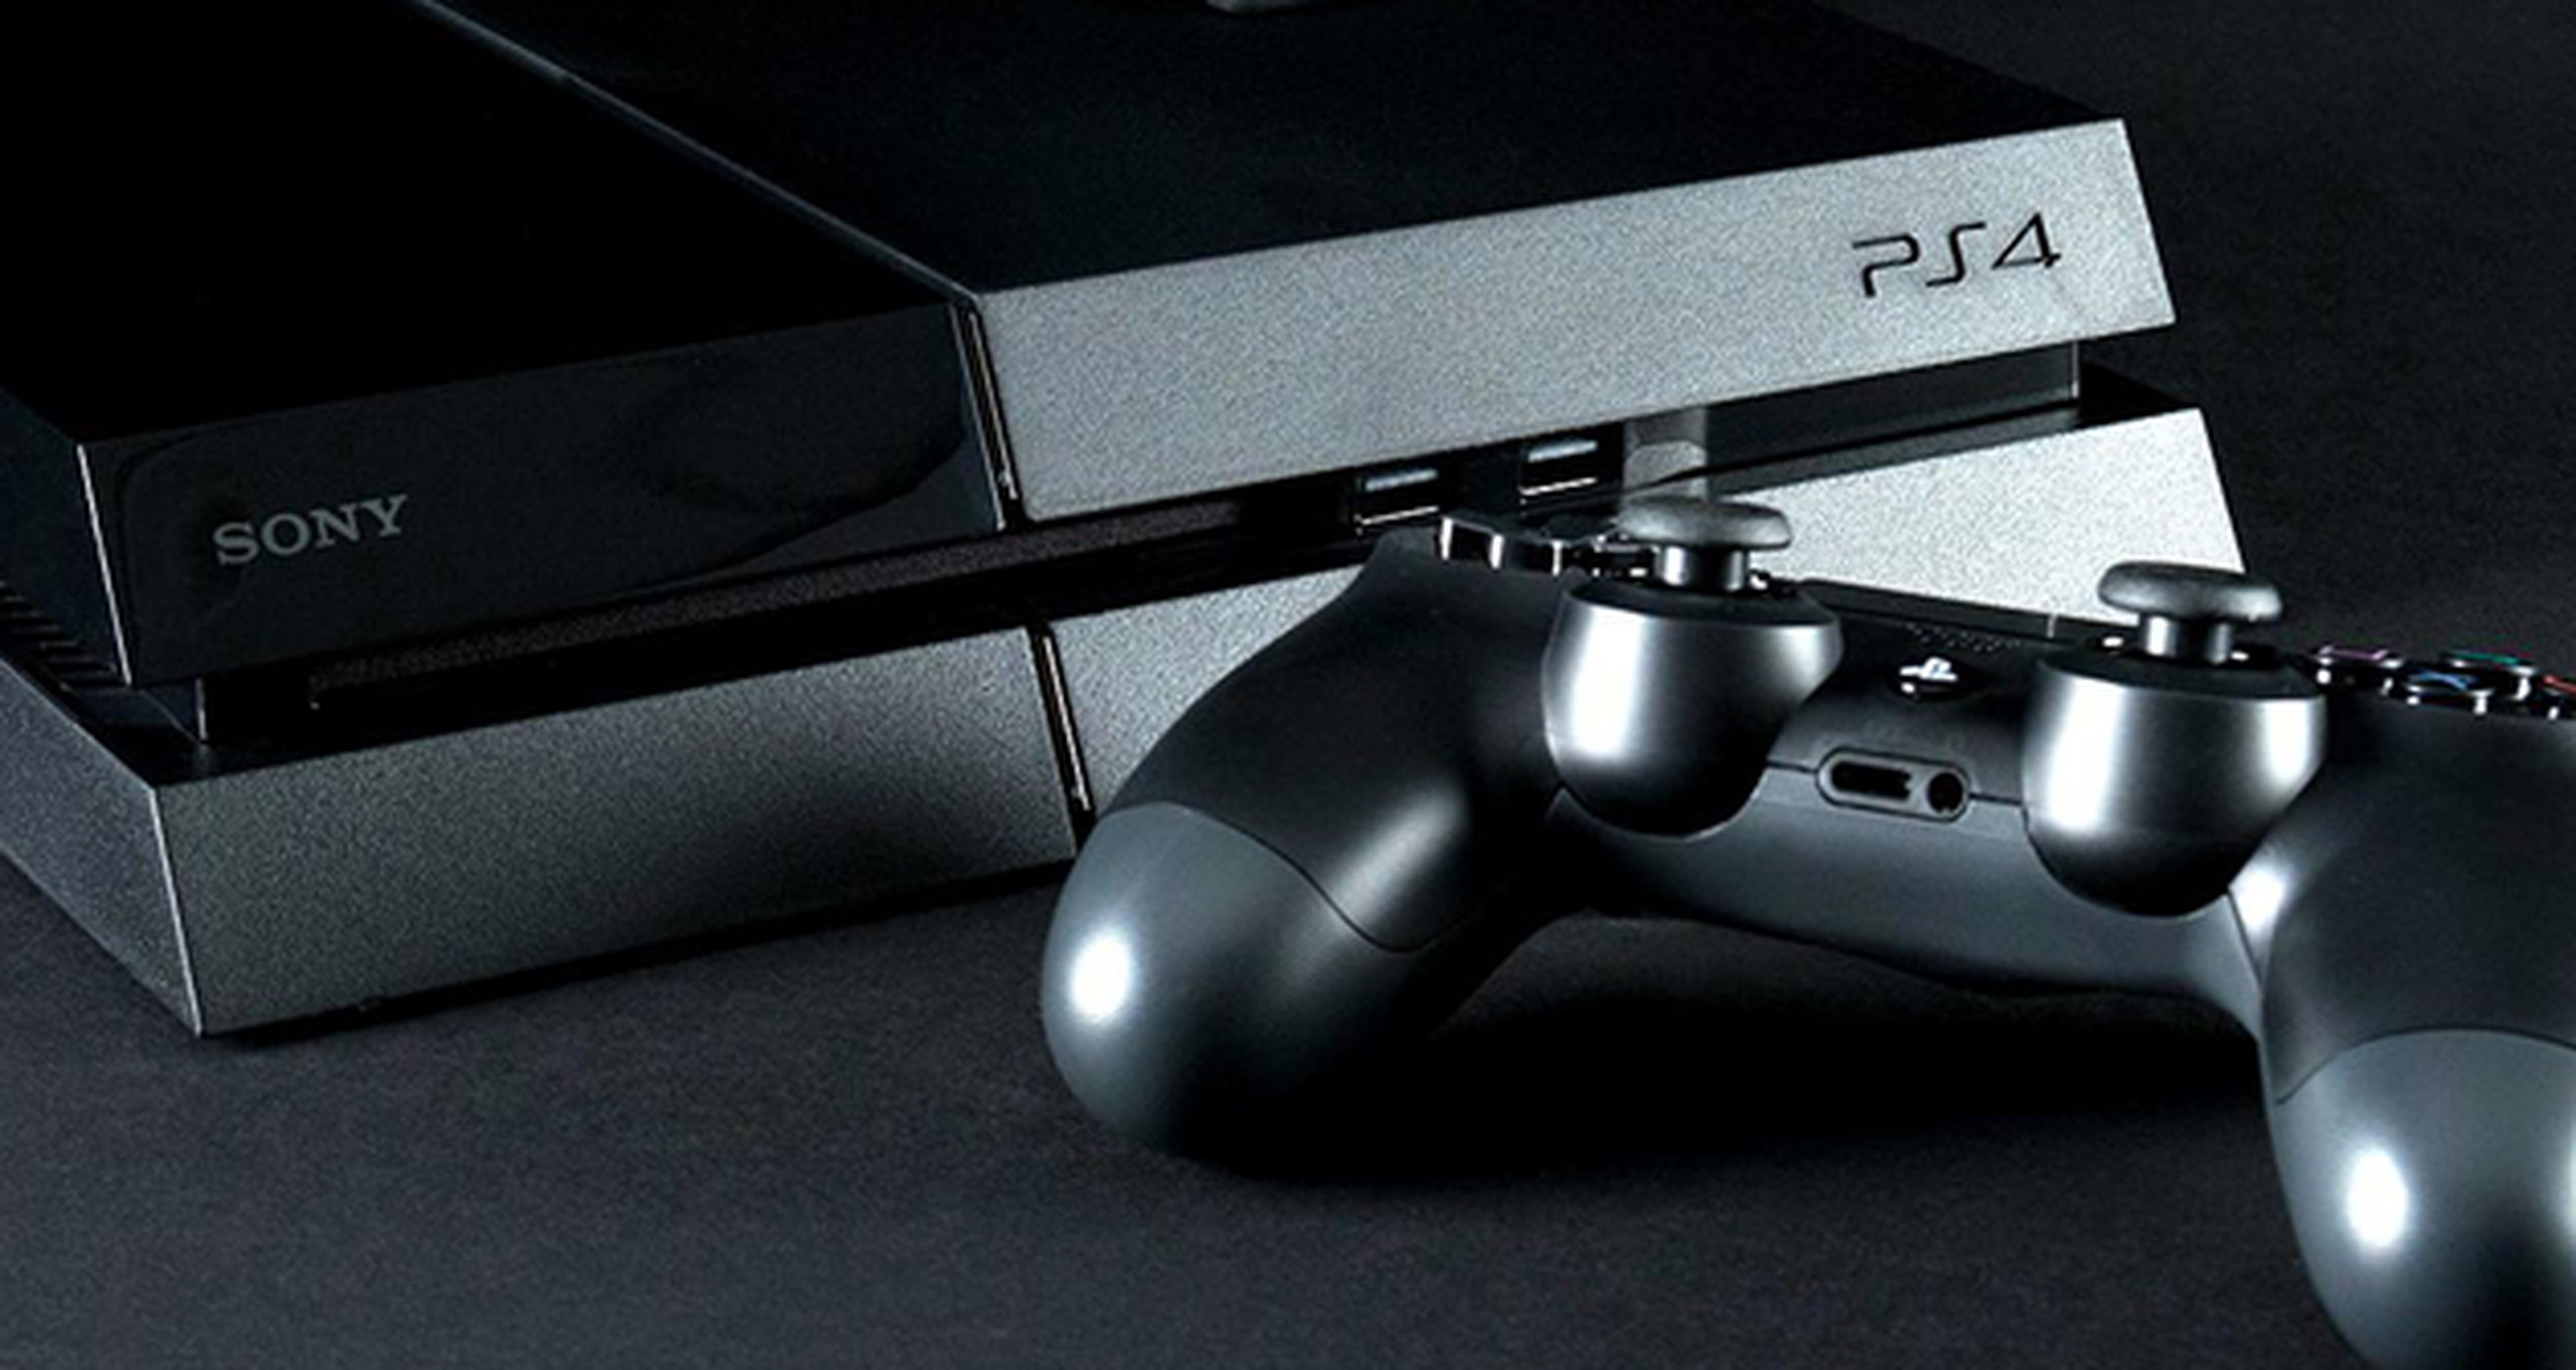 Encuesta: La próxima consola que compraréis es PS4